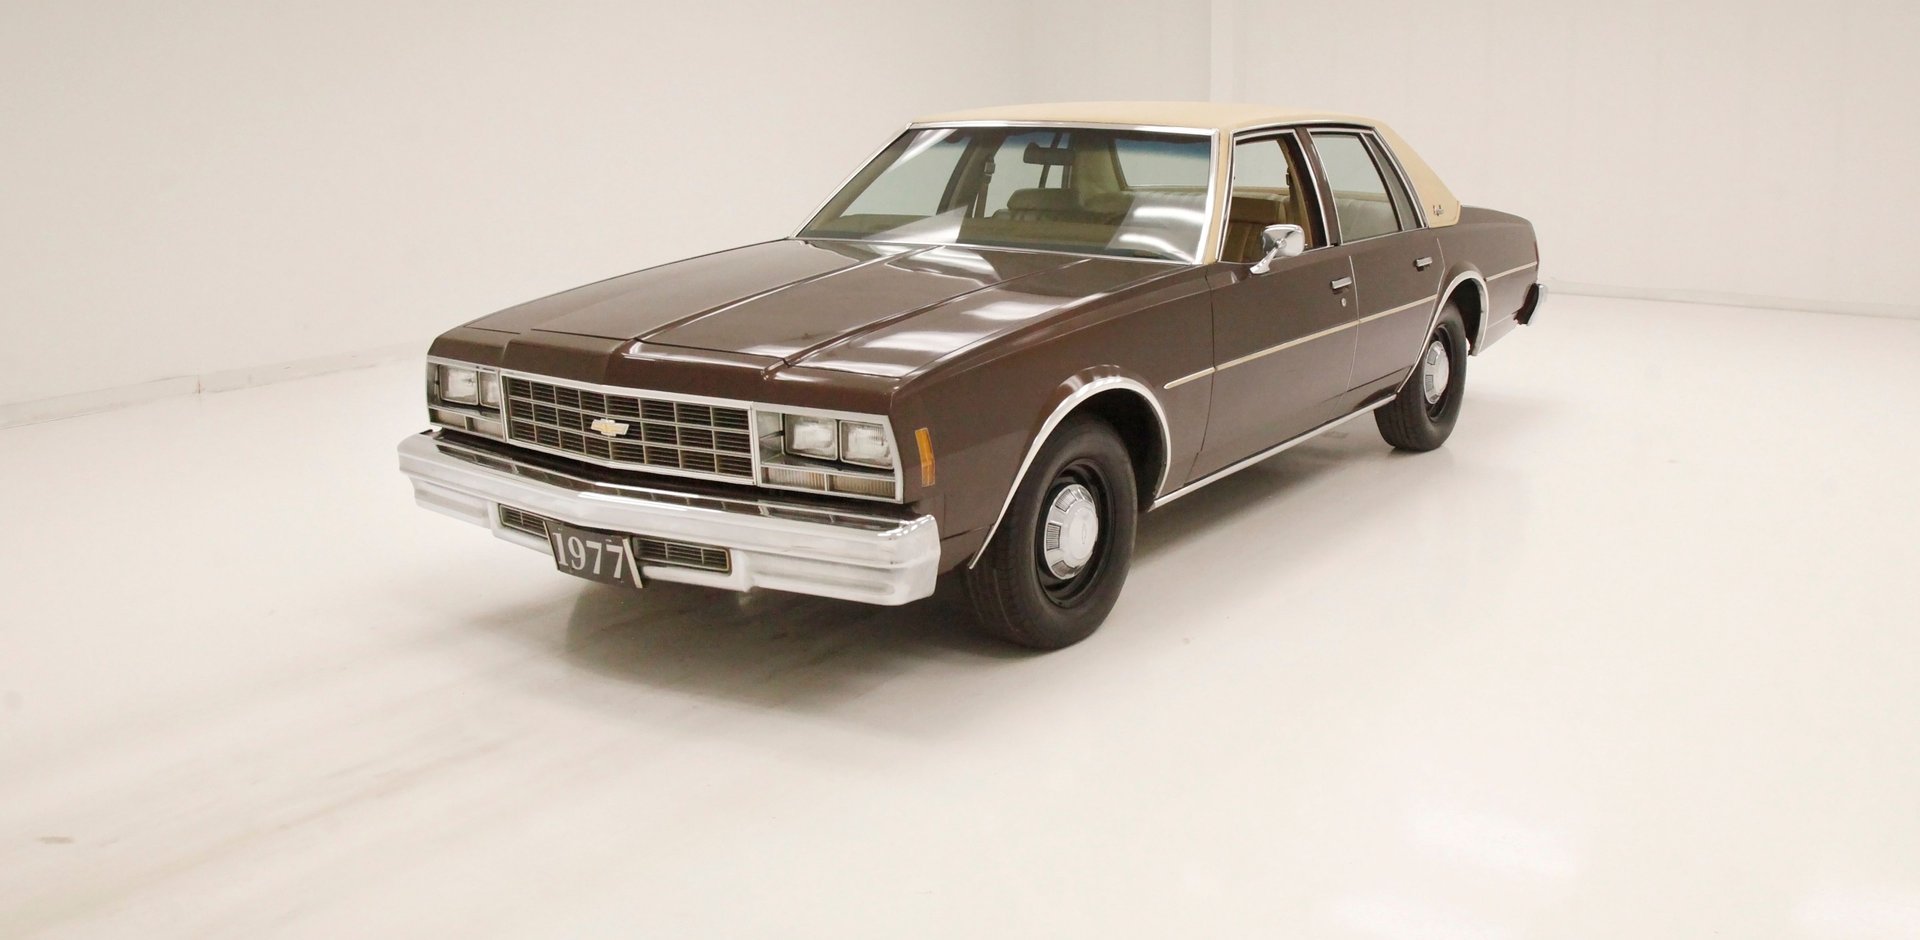 1977 Chevrolet Impala | Classic Auto Mall